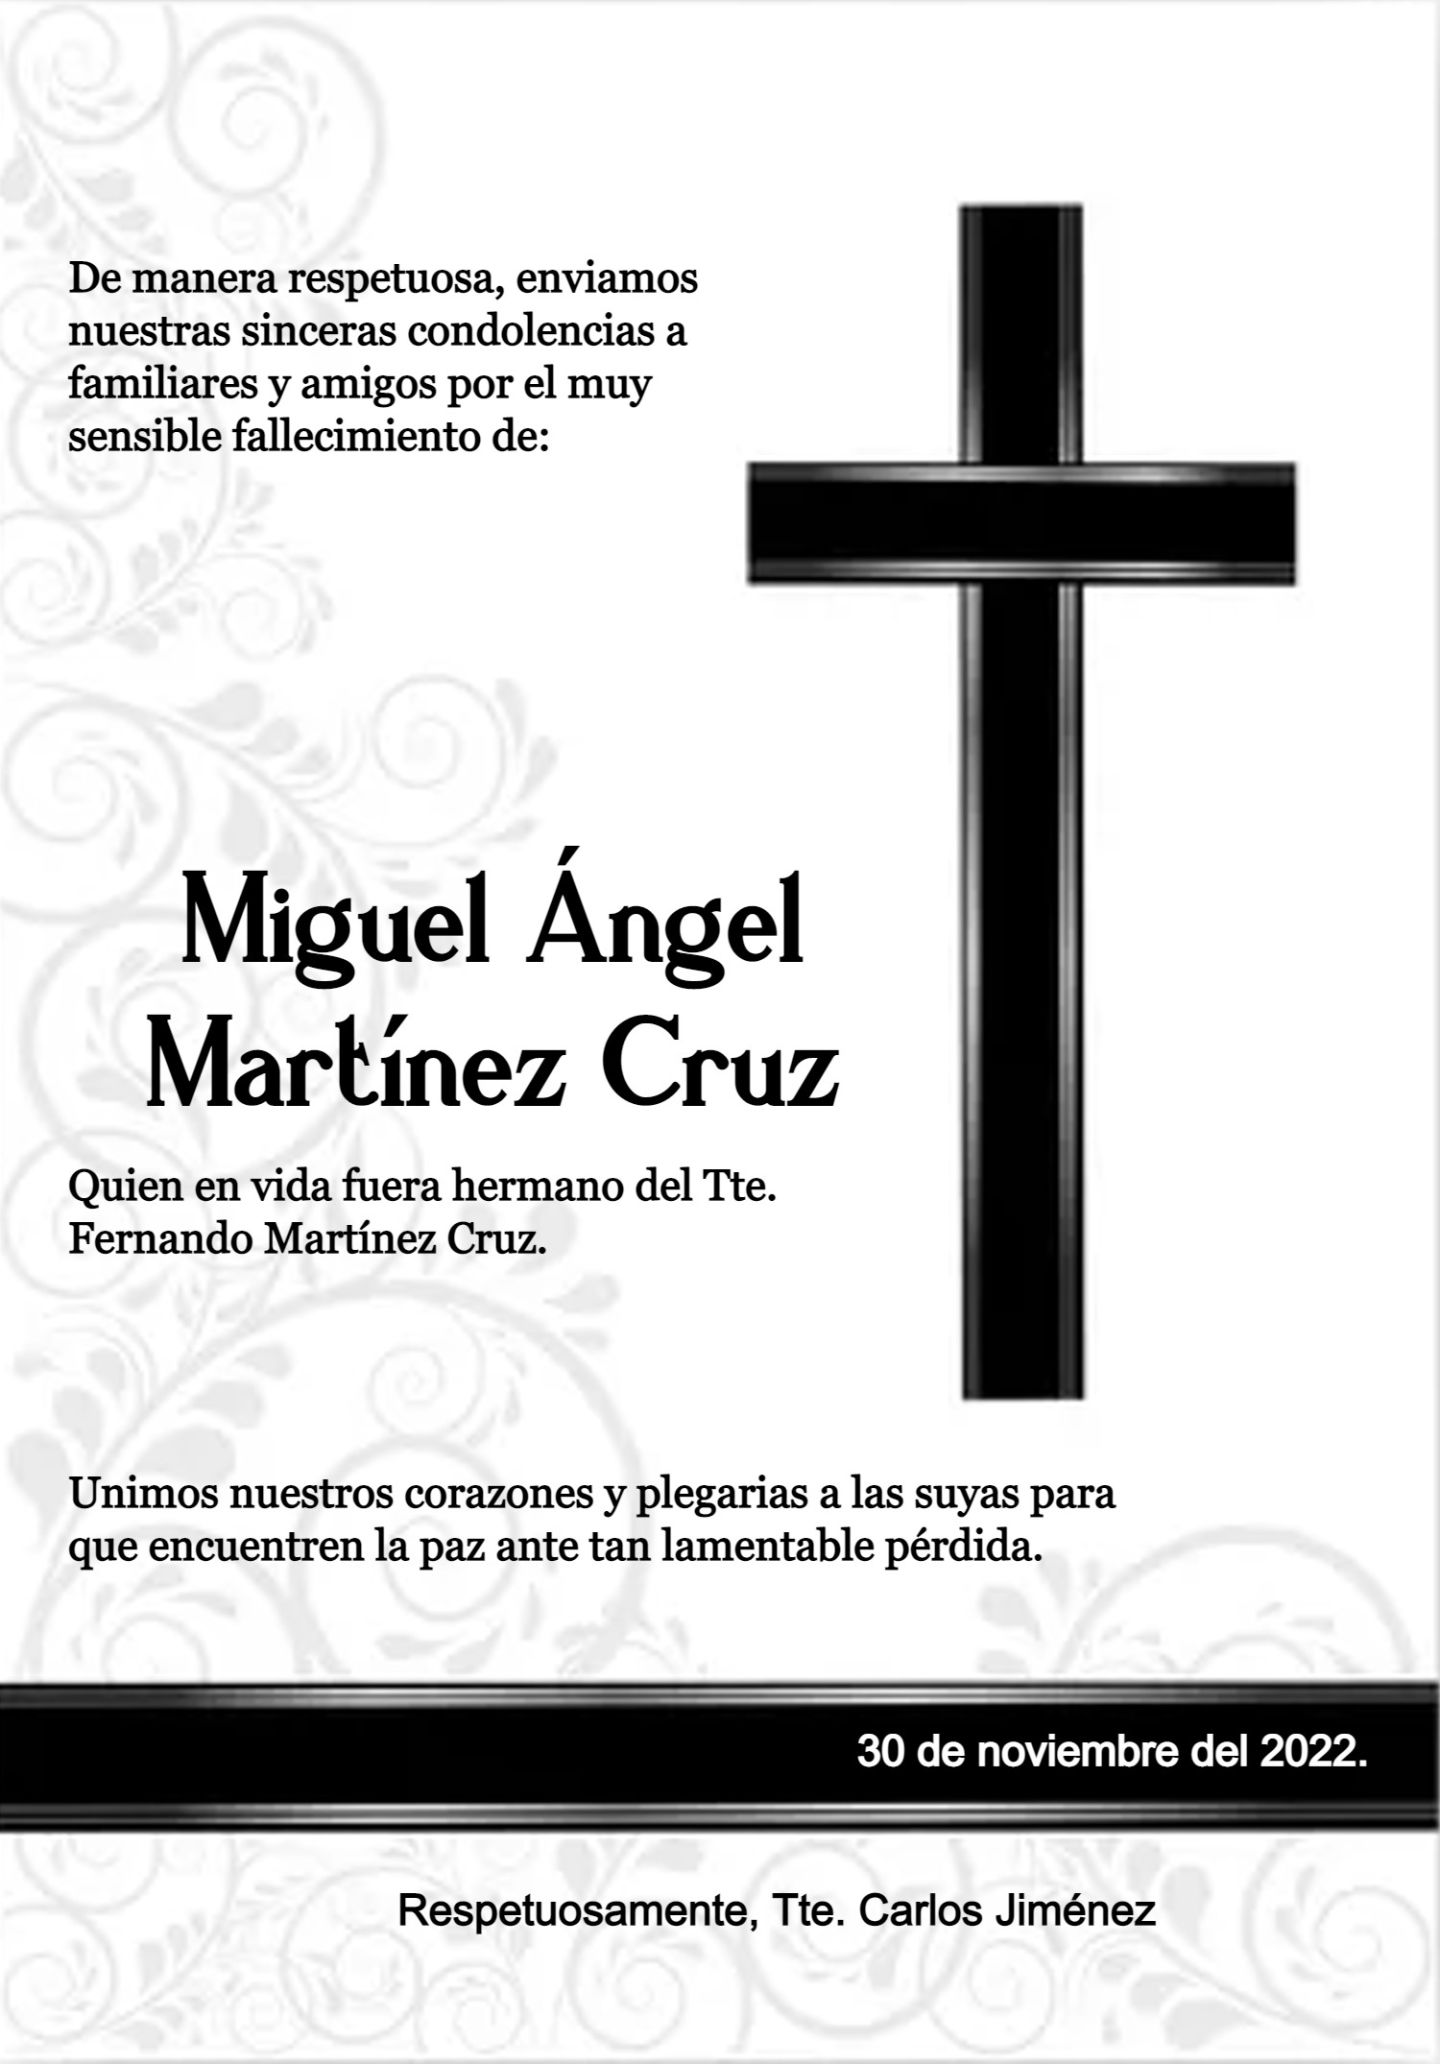 Miguel Ángel Martínez Cruz